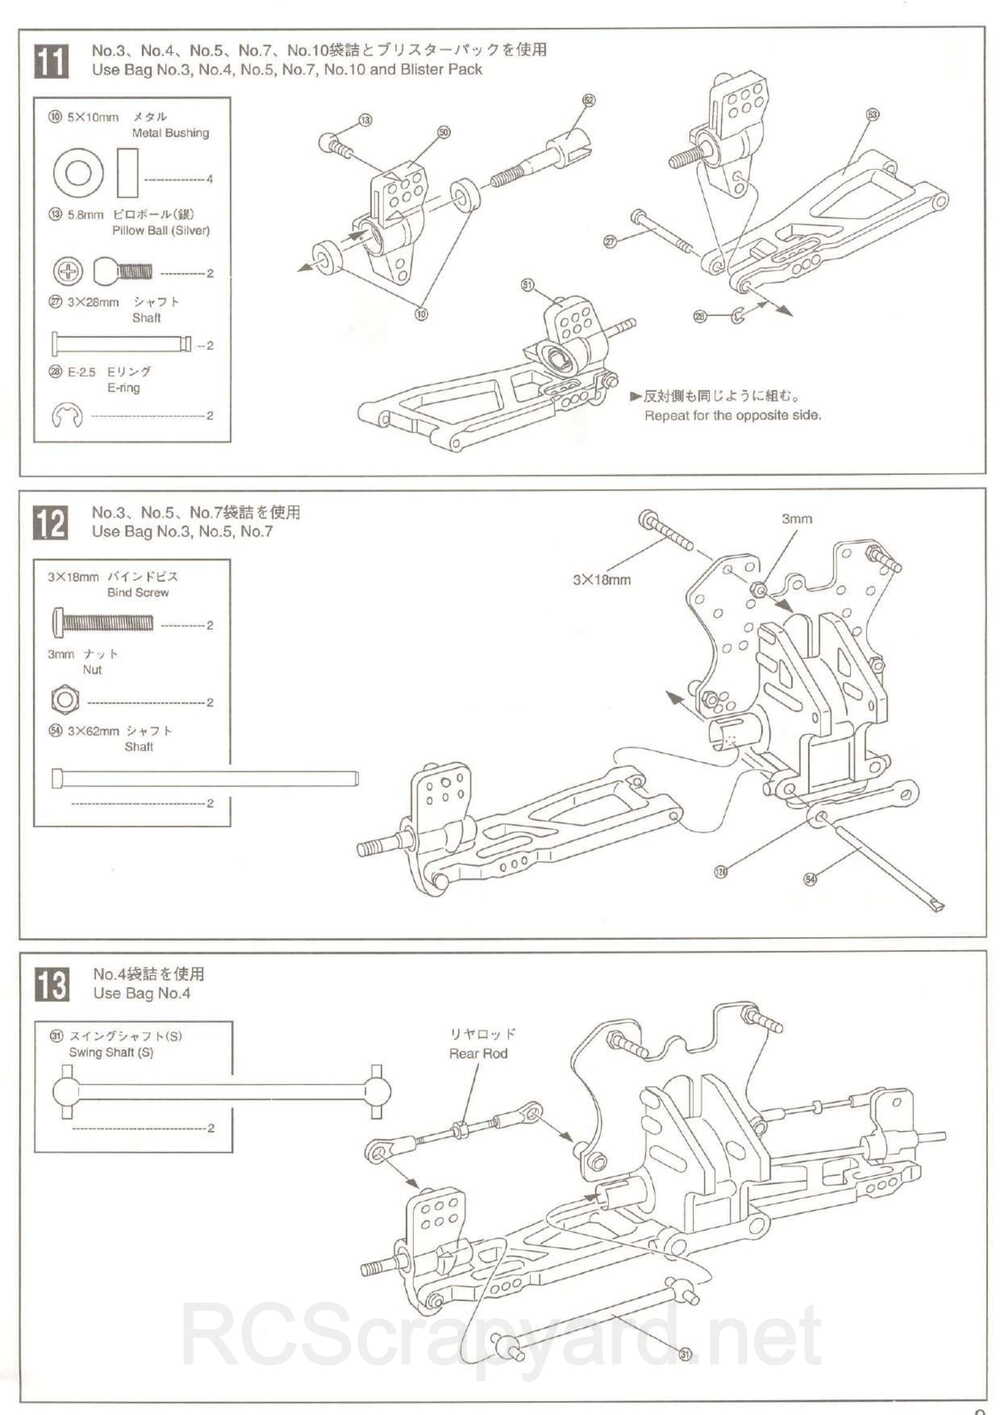 Kyosho - 31345 - Inferno 10 - Manual - Page 09